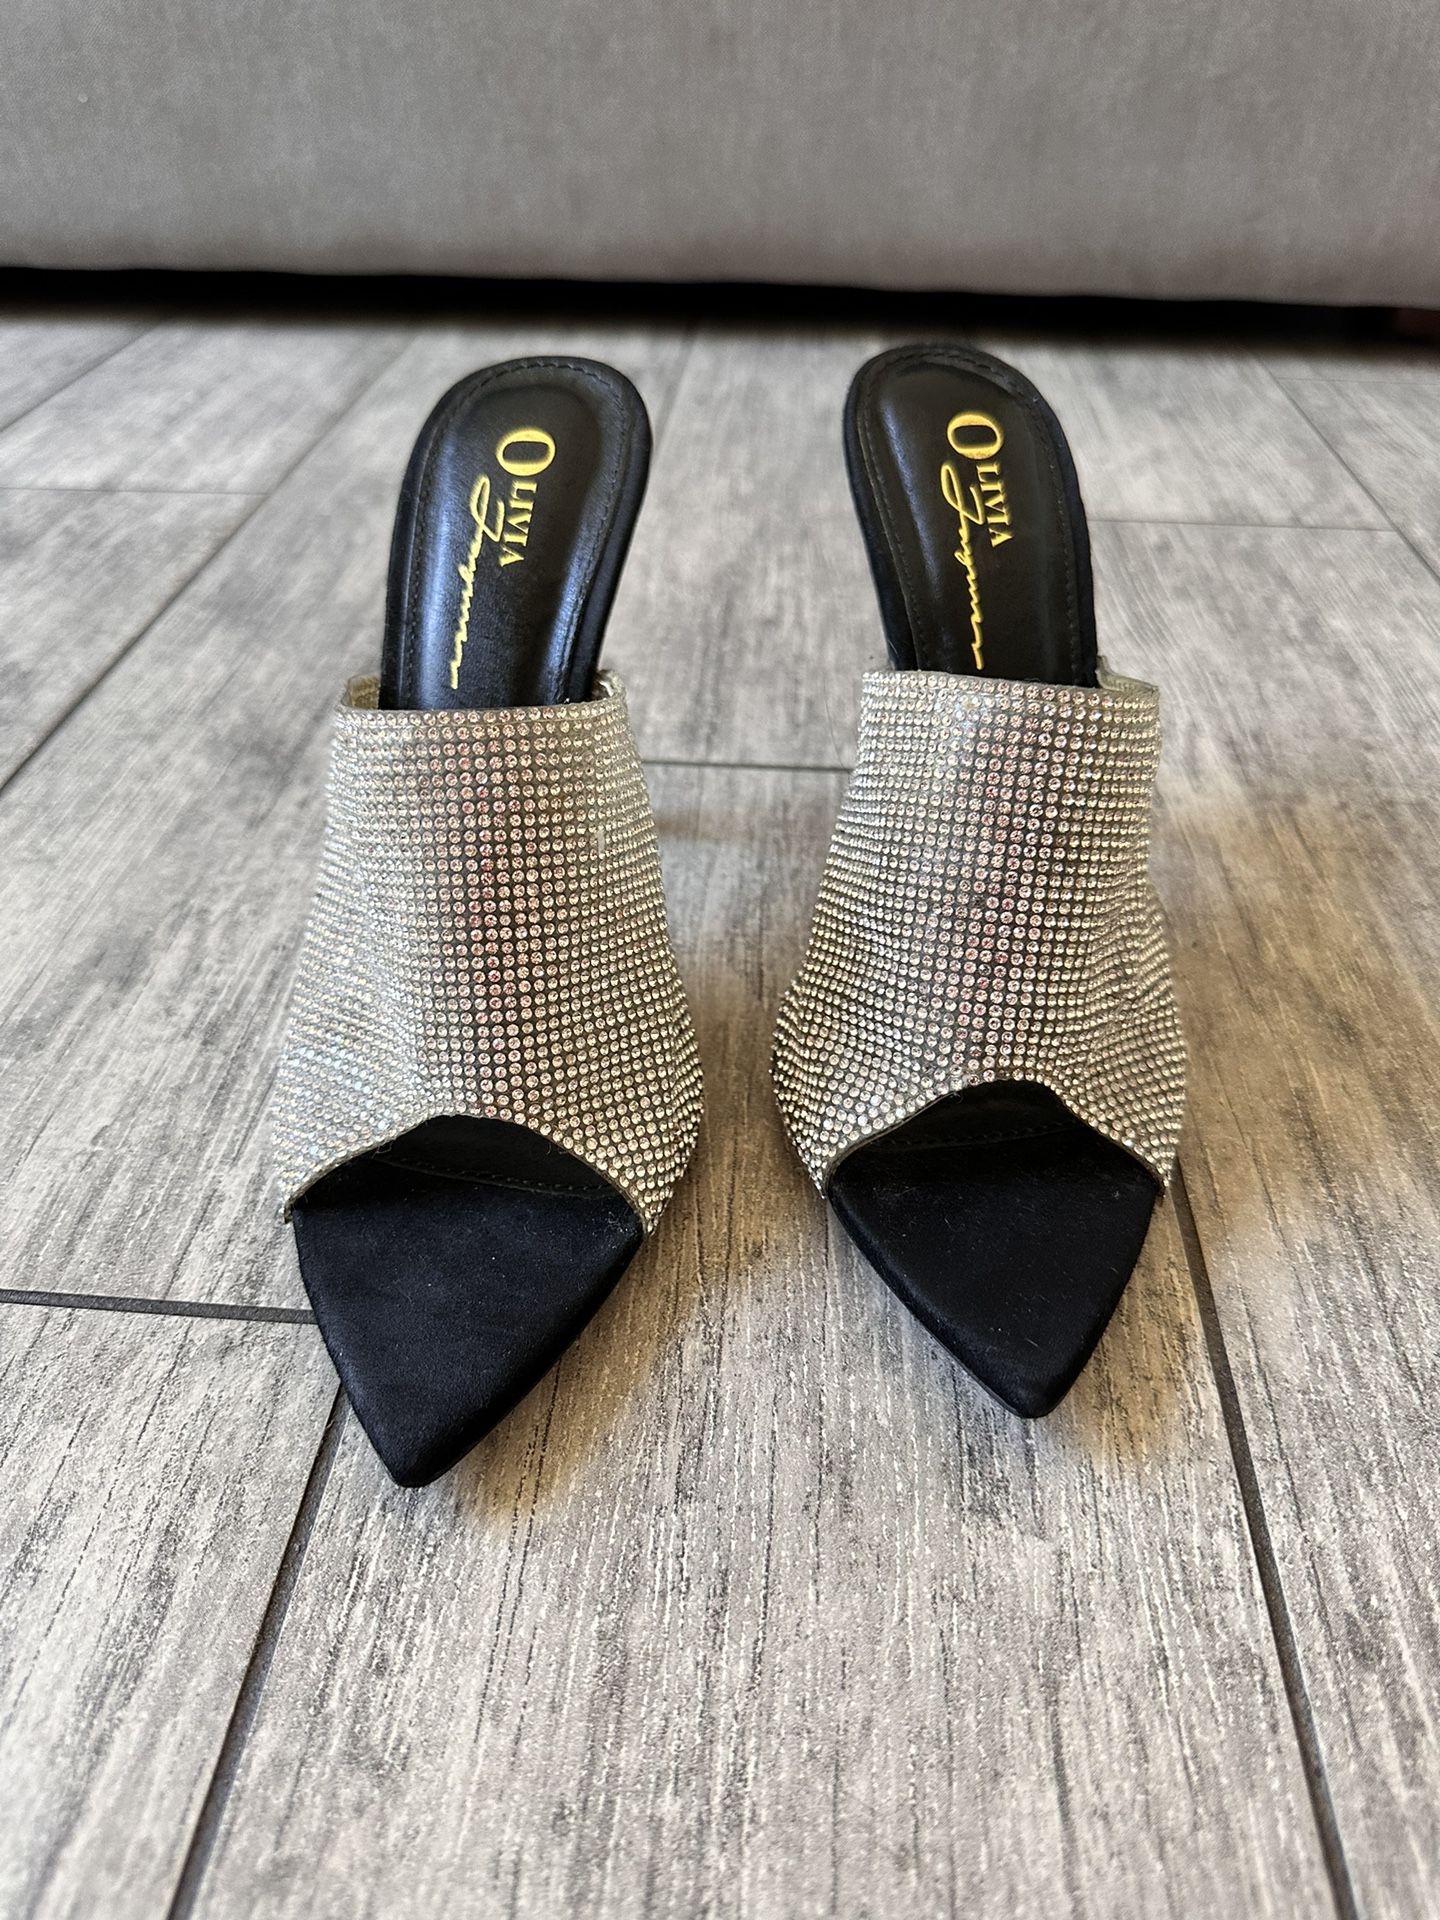 Rhinestone Silver heel - Size 6.5